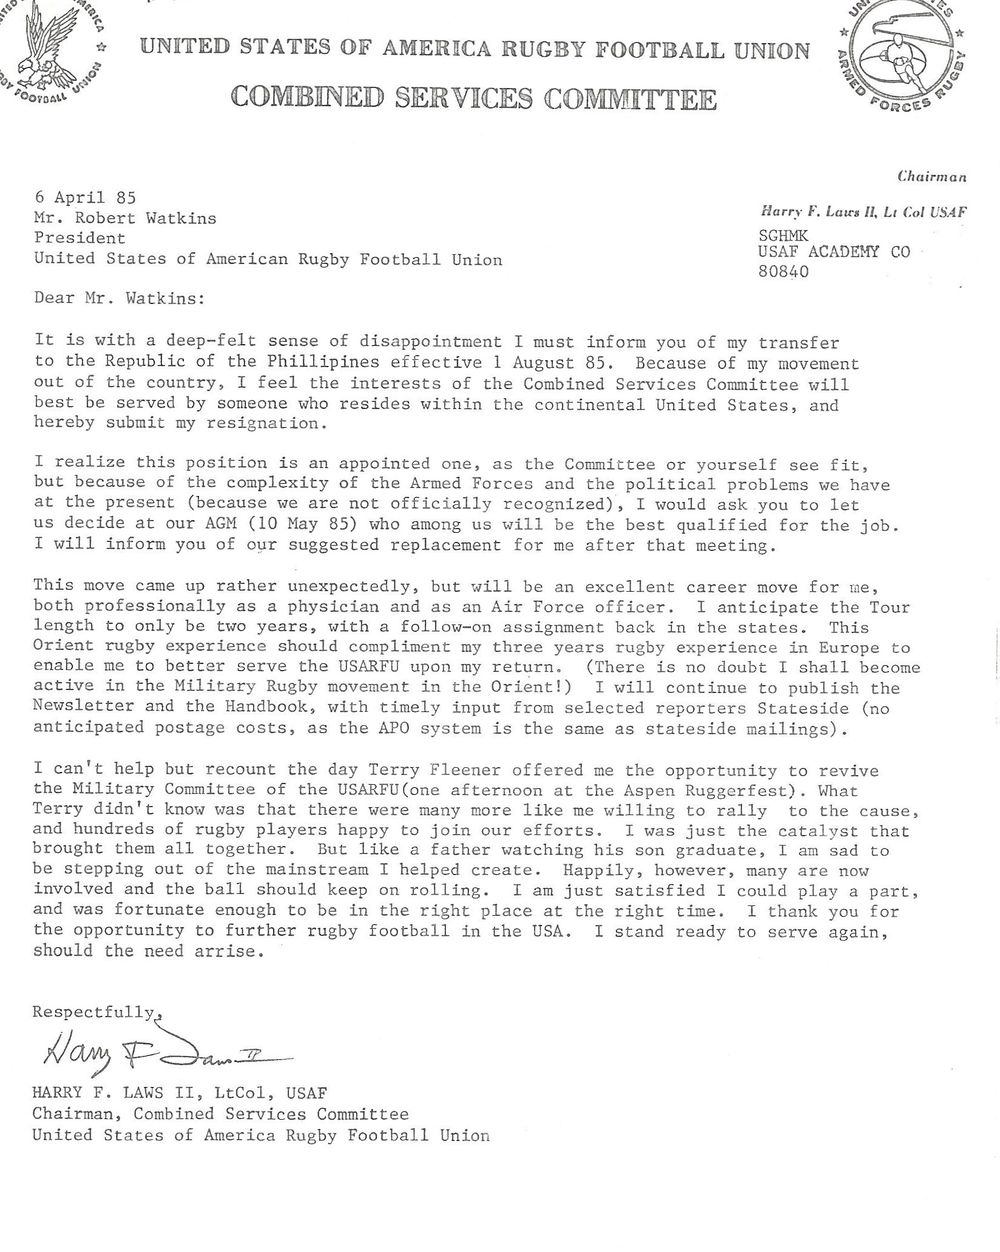 1985 HLaws resignation to USA RFU.jpg